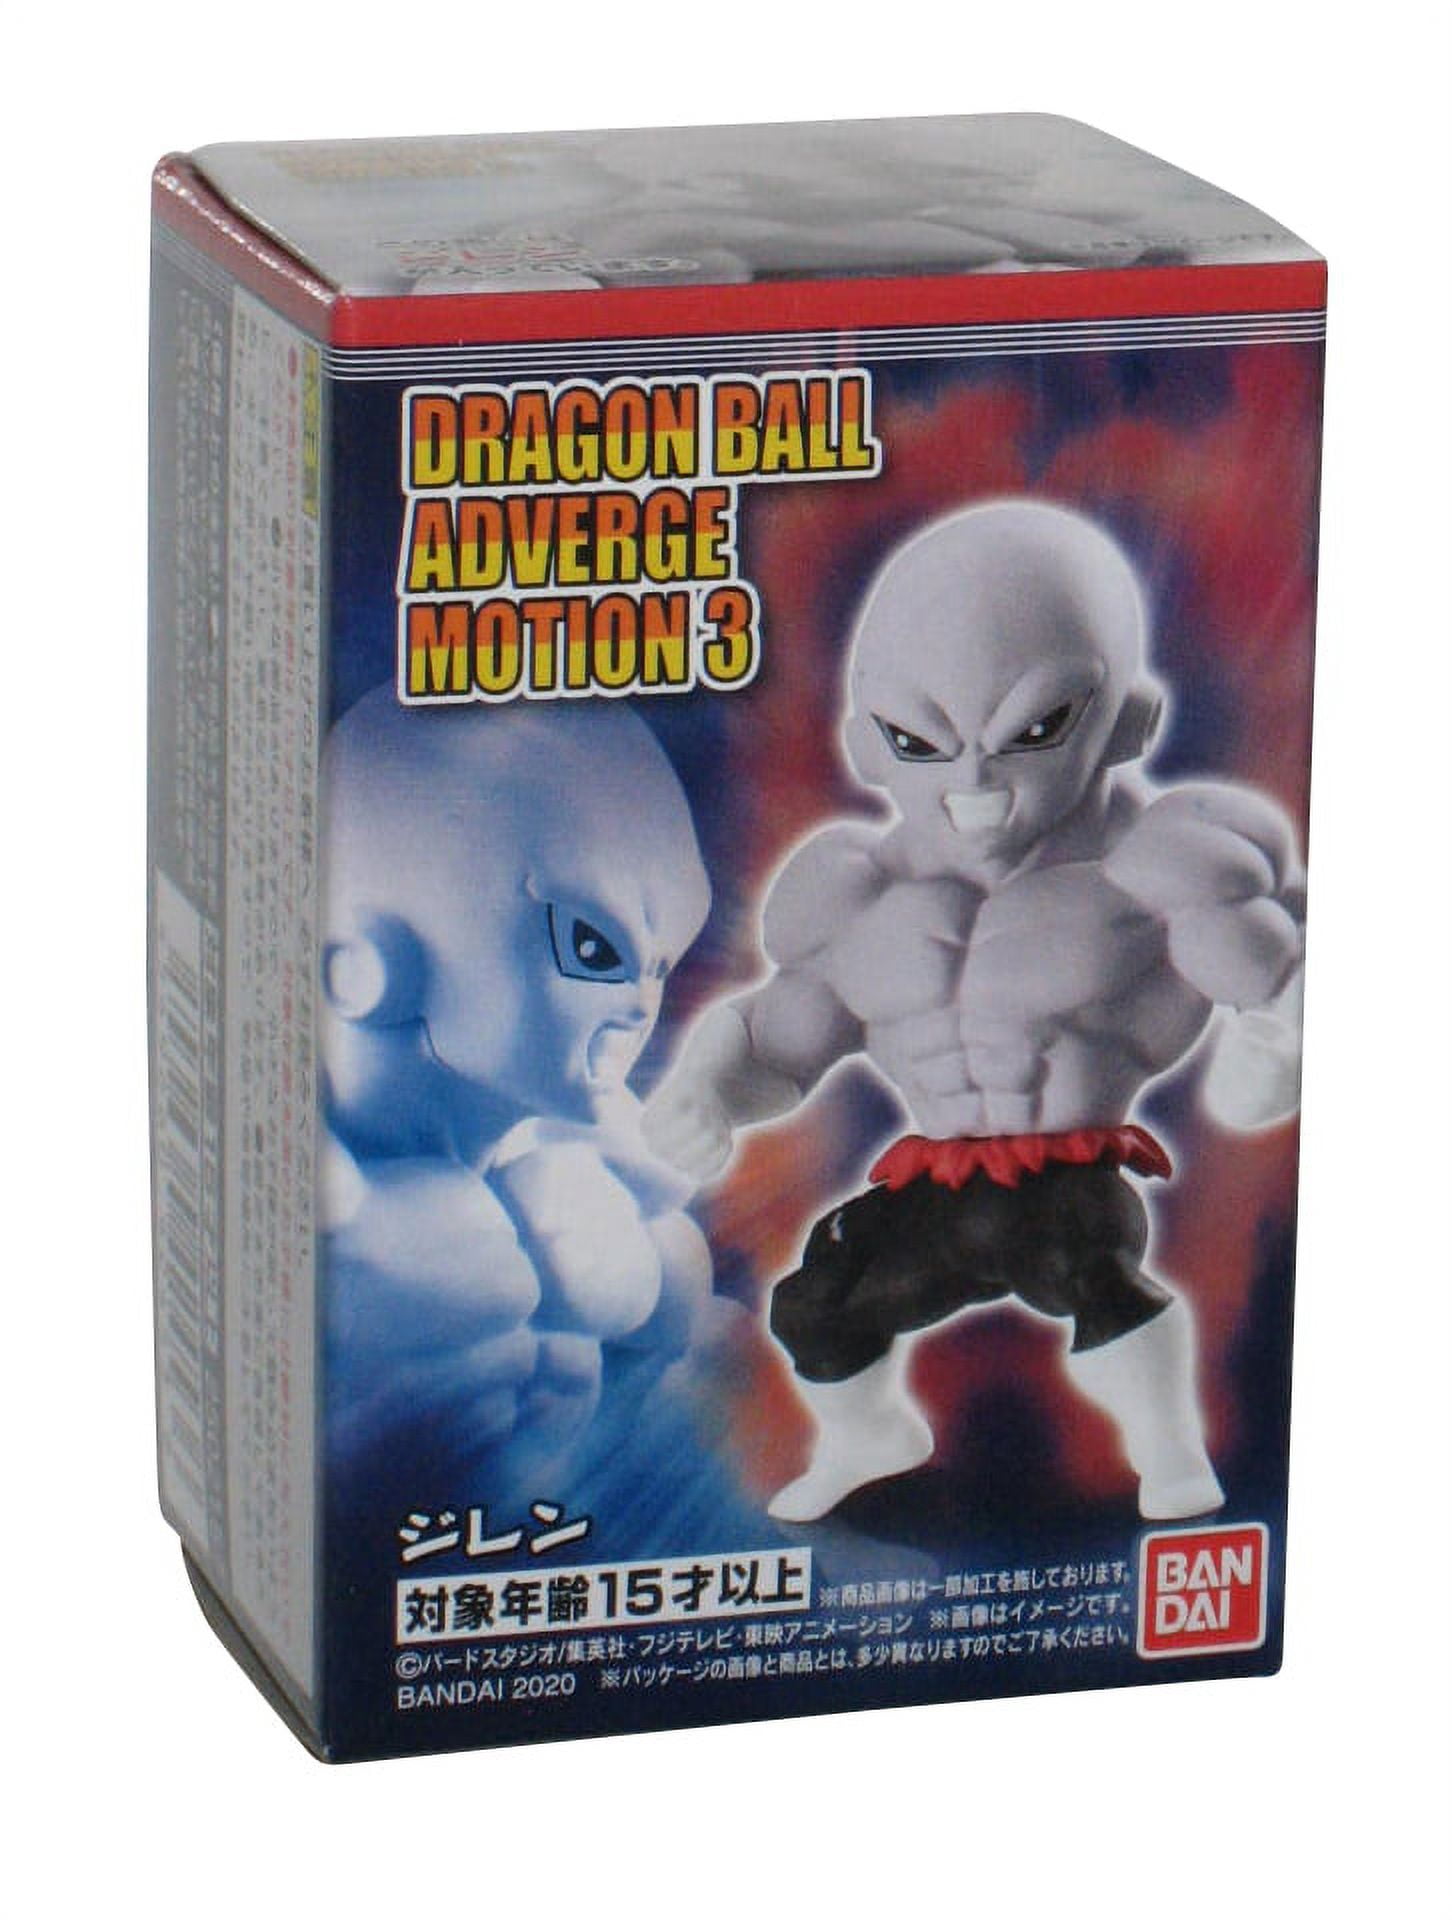 Bandai Dragon Ball Adverge 15 Movie Super Hero Mini Figure Toy